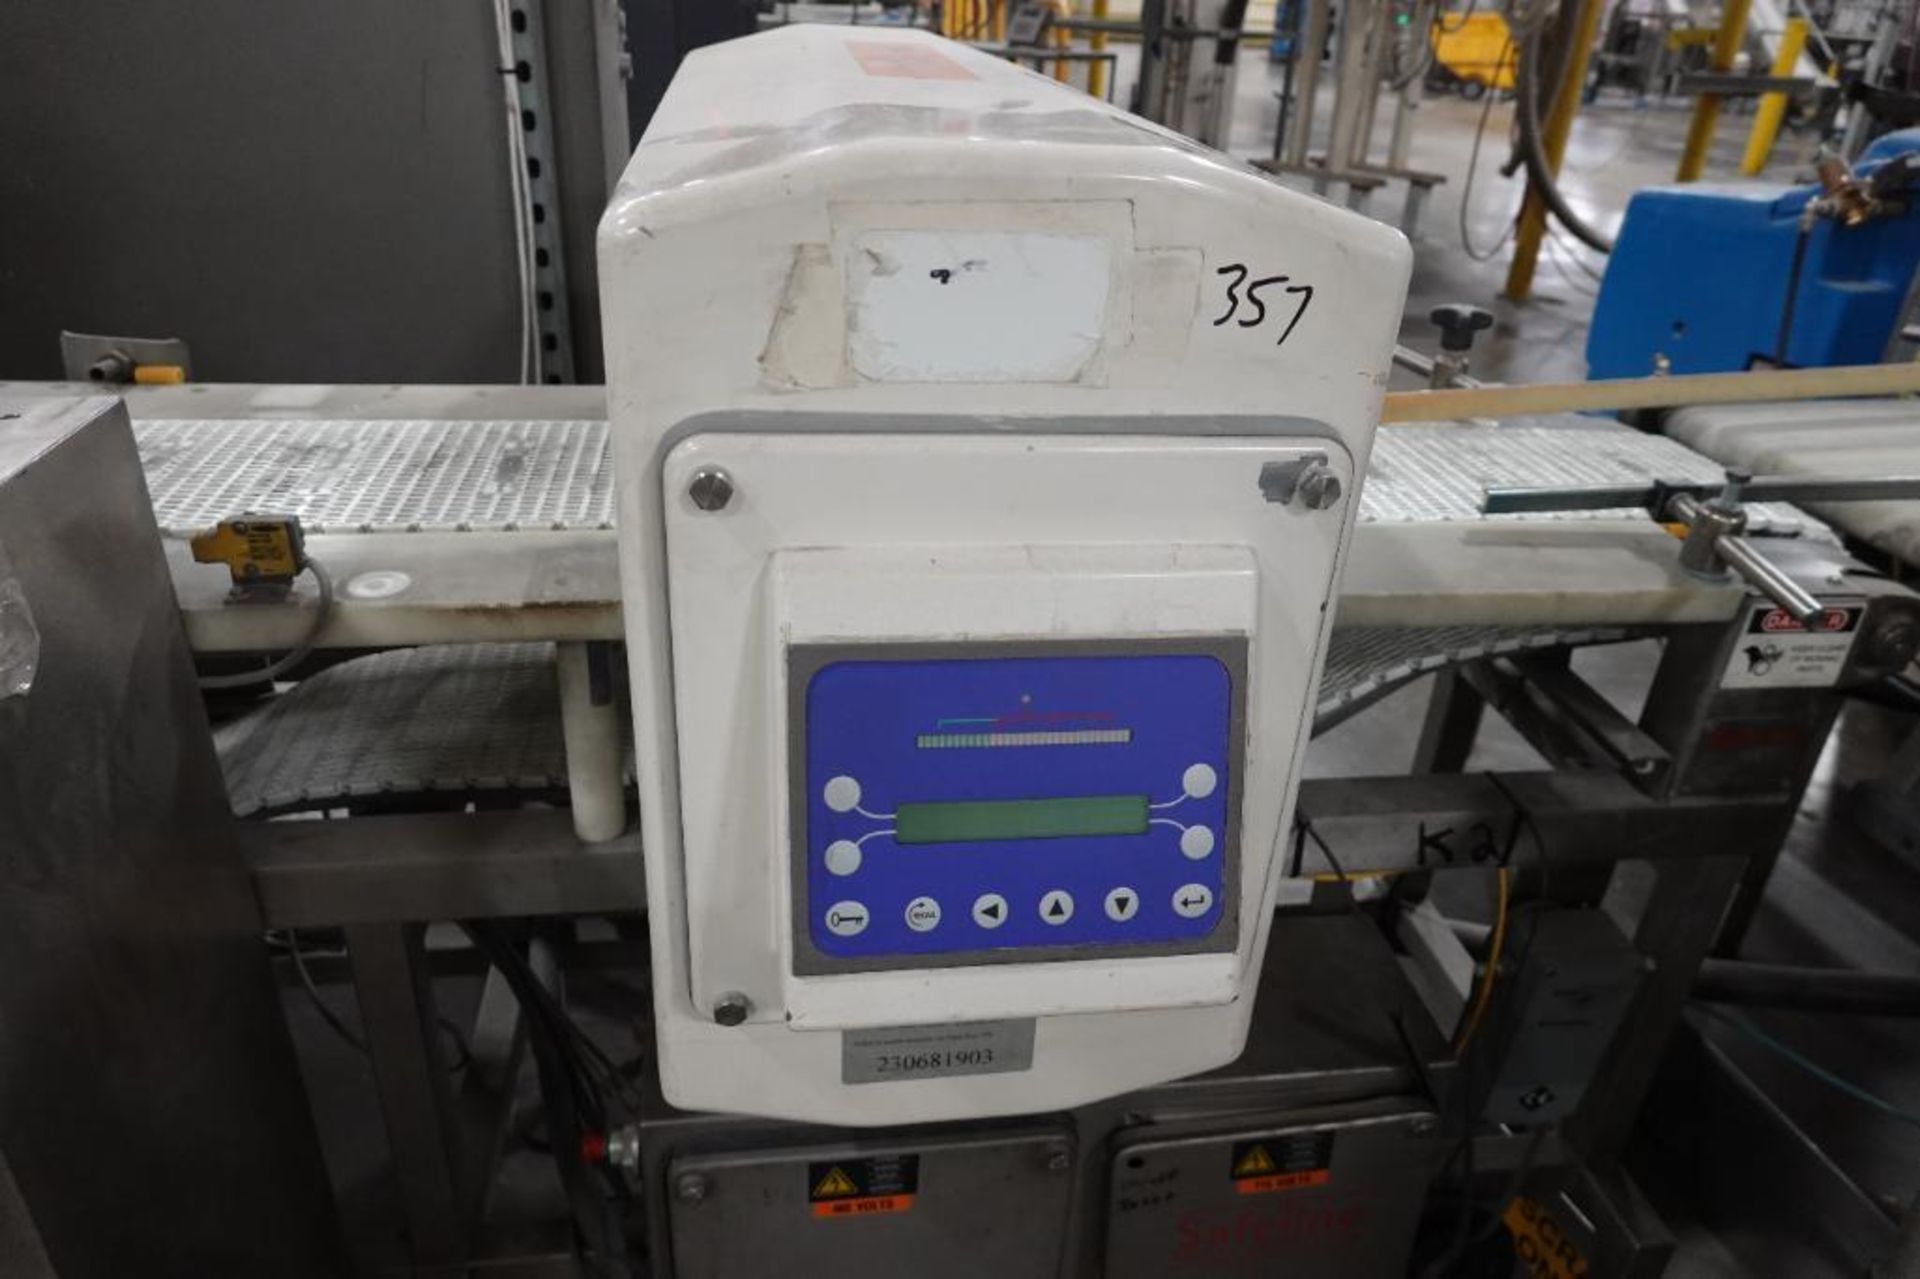 Safeline metal detector with conveyor - Image 6 of 9